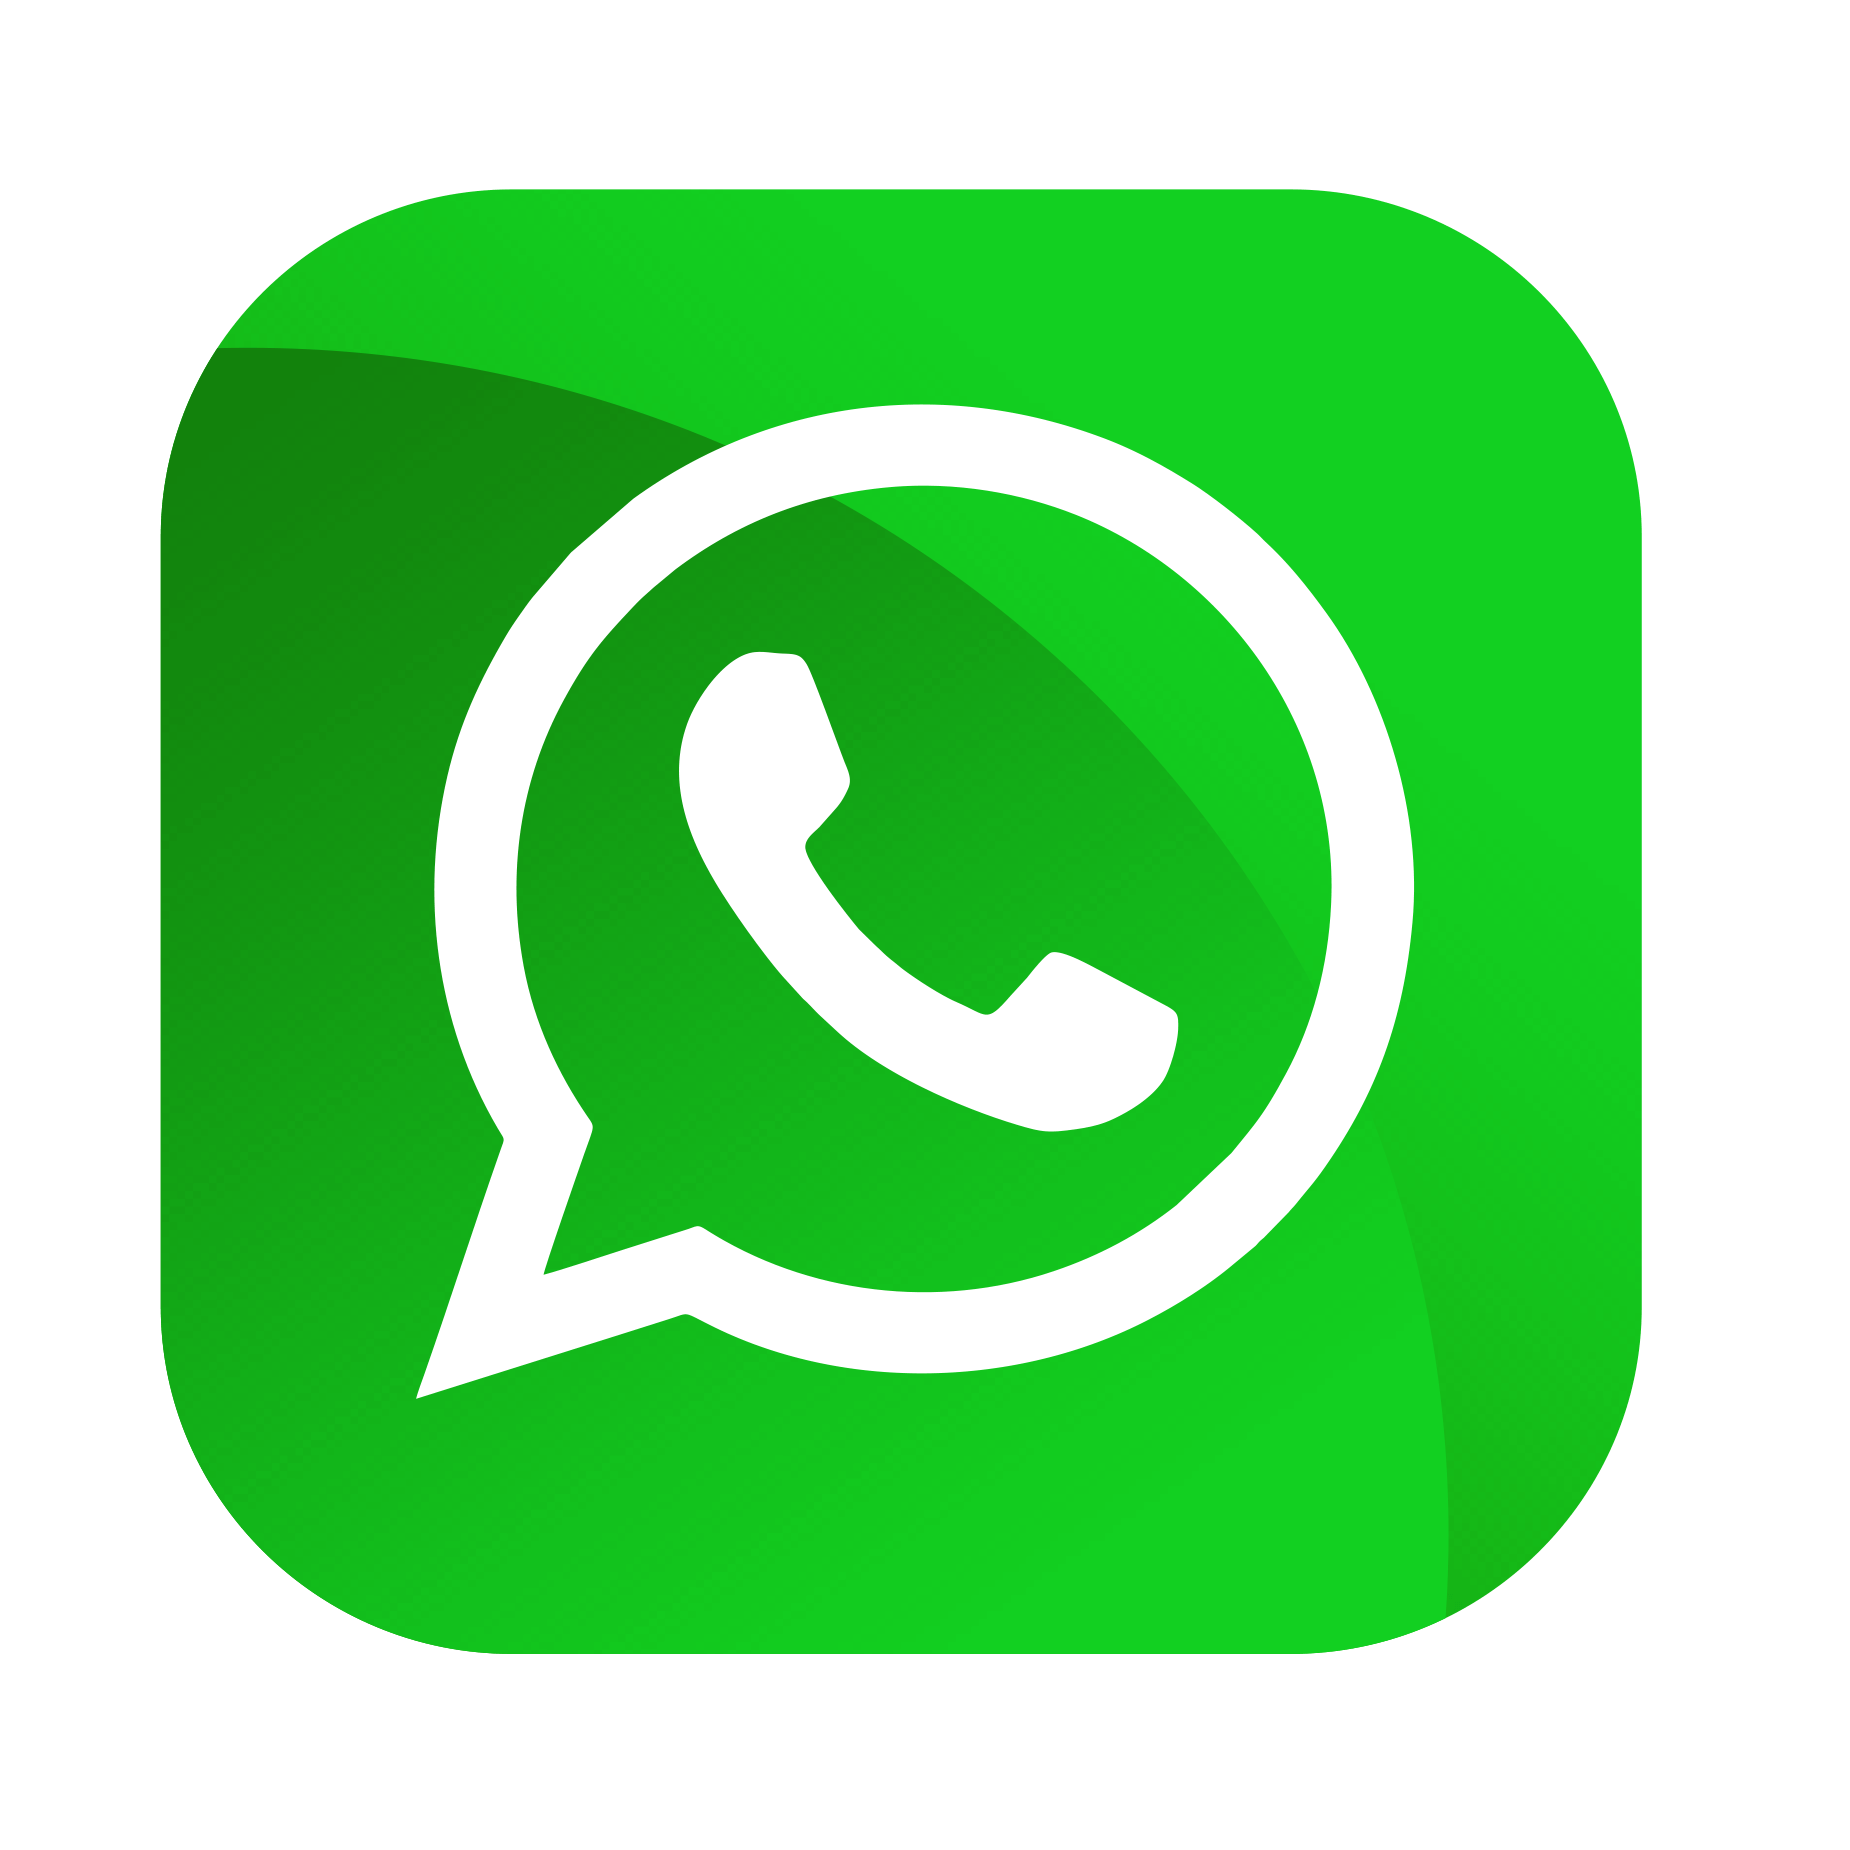 WhatsApp icon PNG